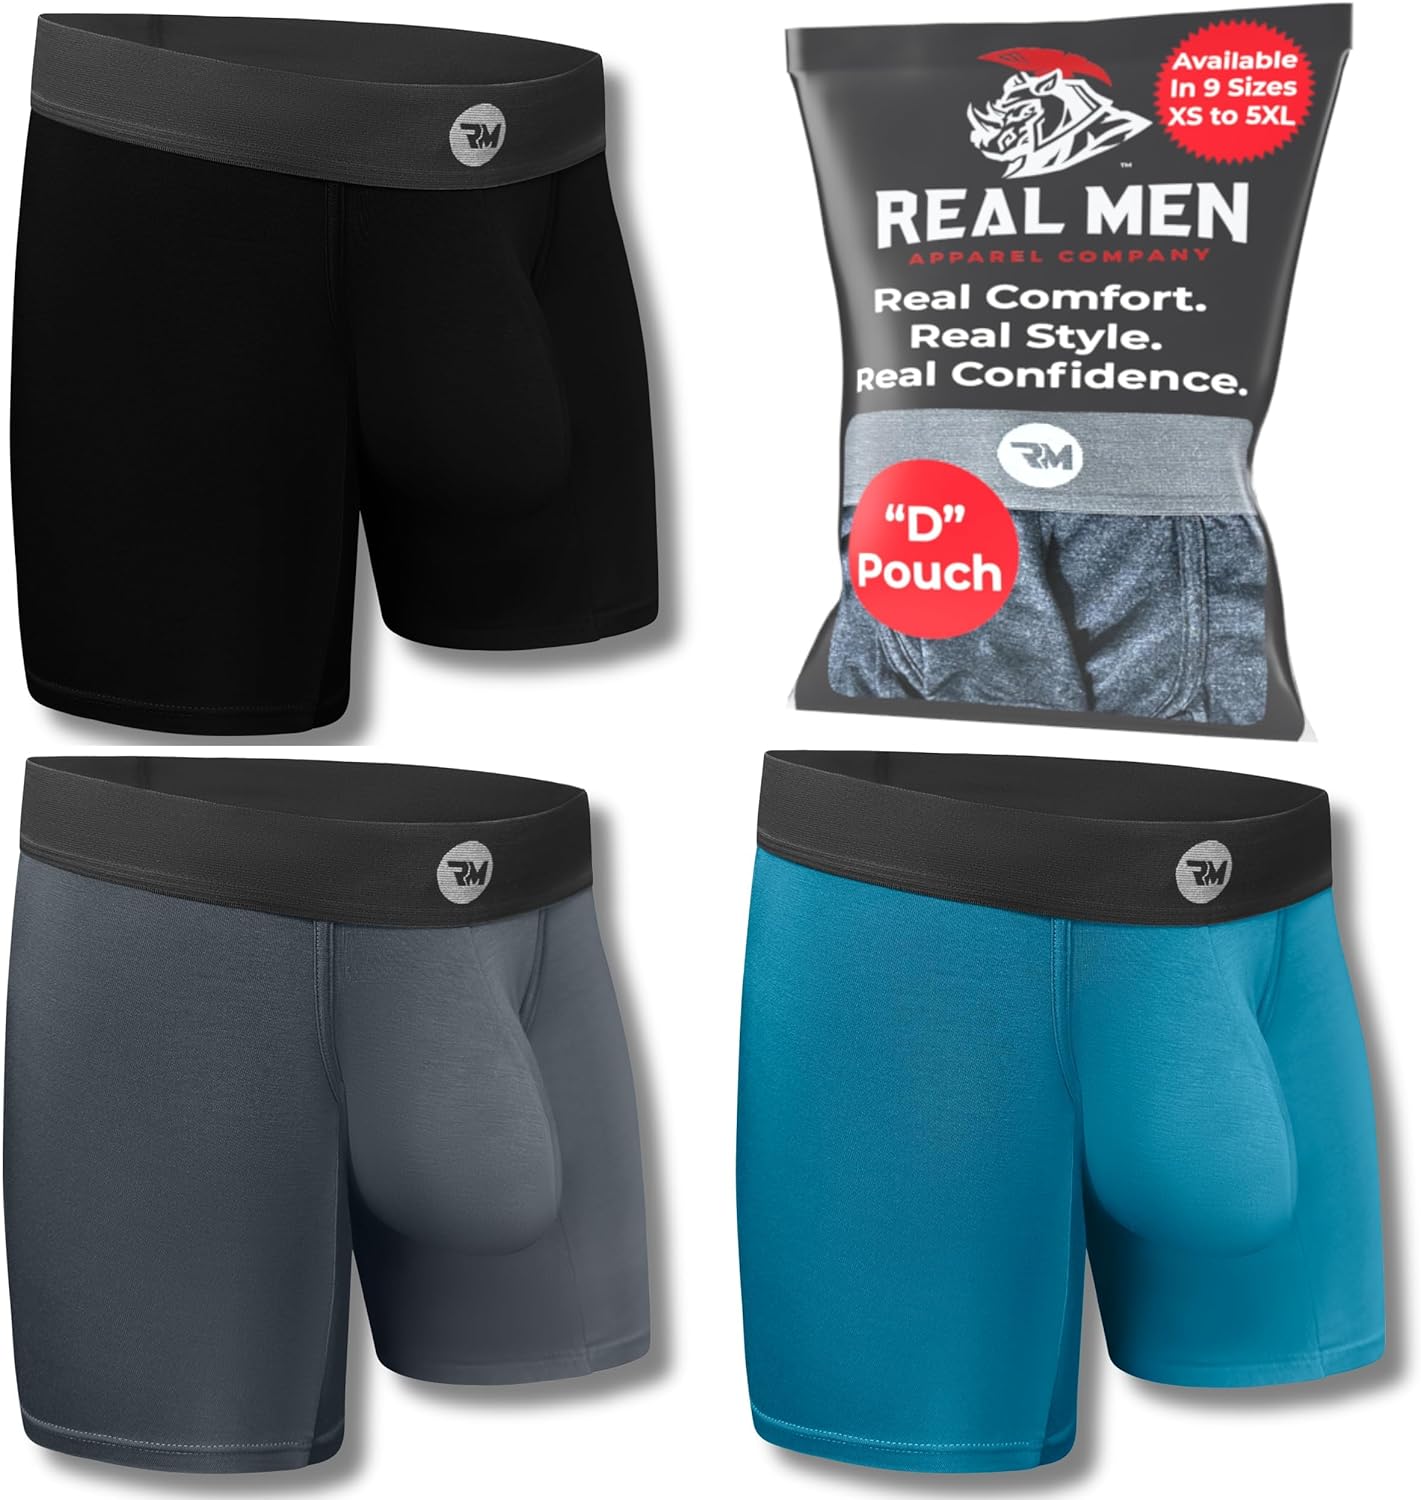 RM Real Men Real Men Bulge Enhancing Pouch Underwear for Men